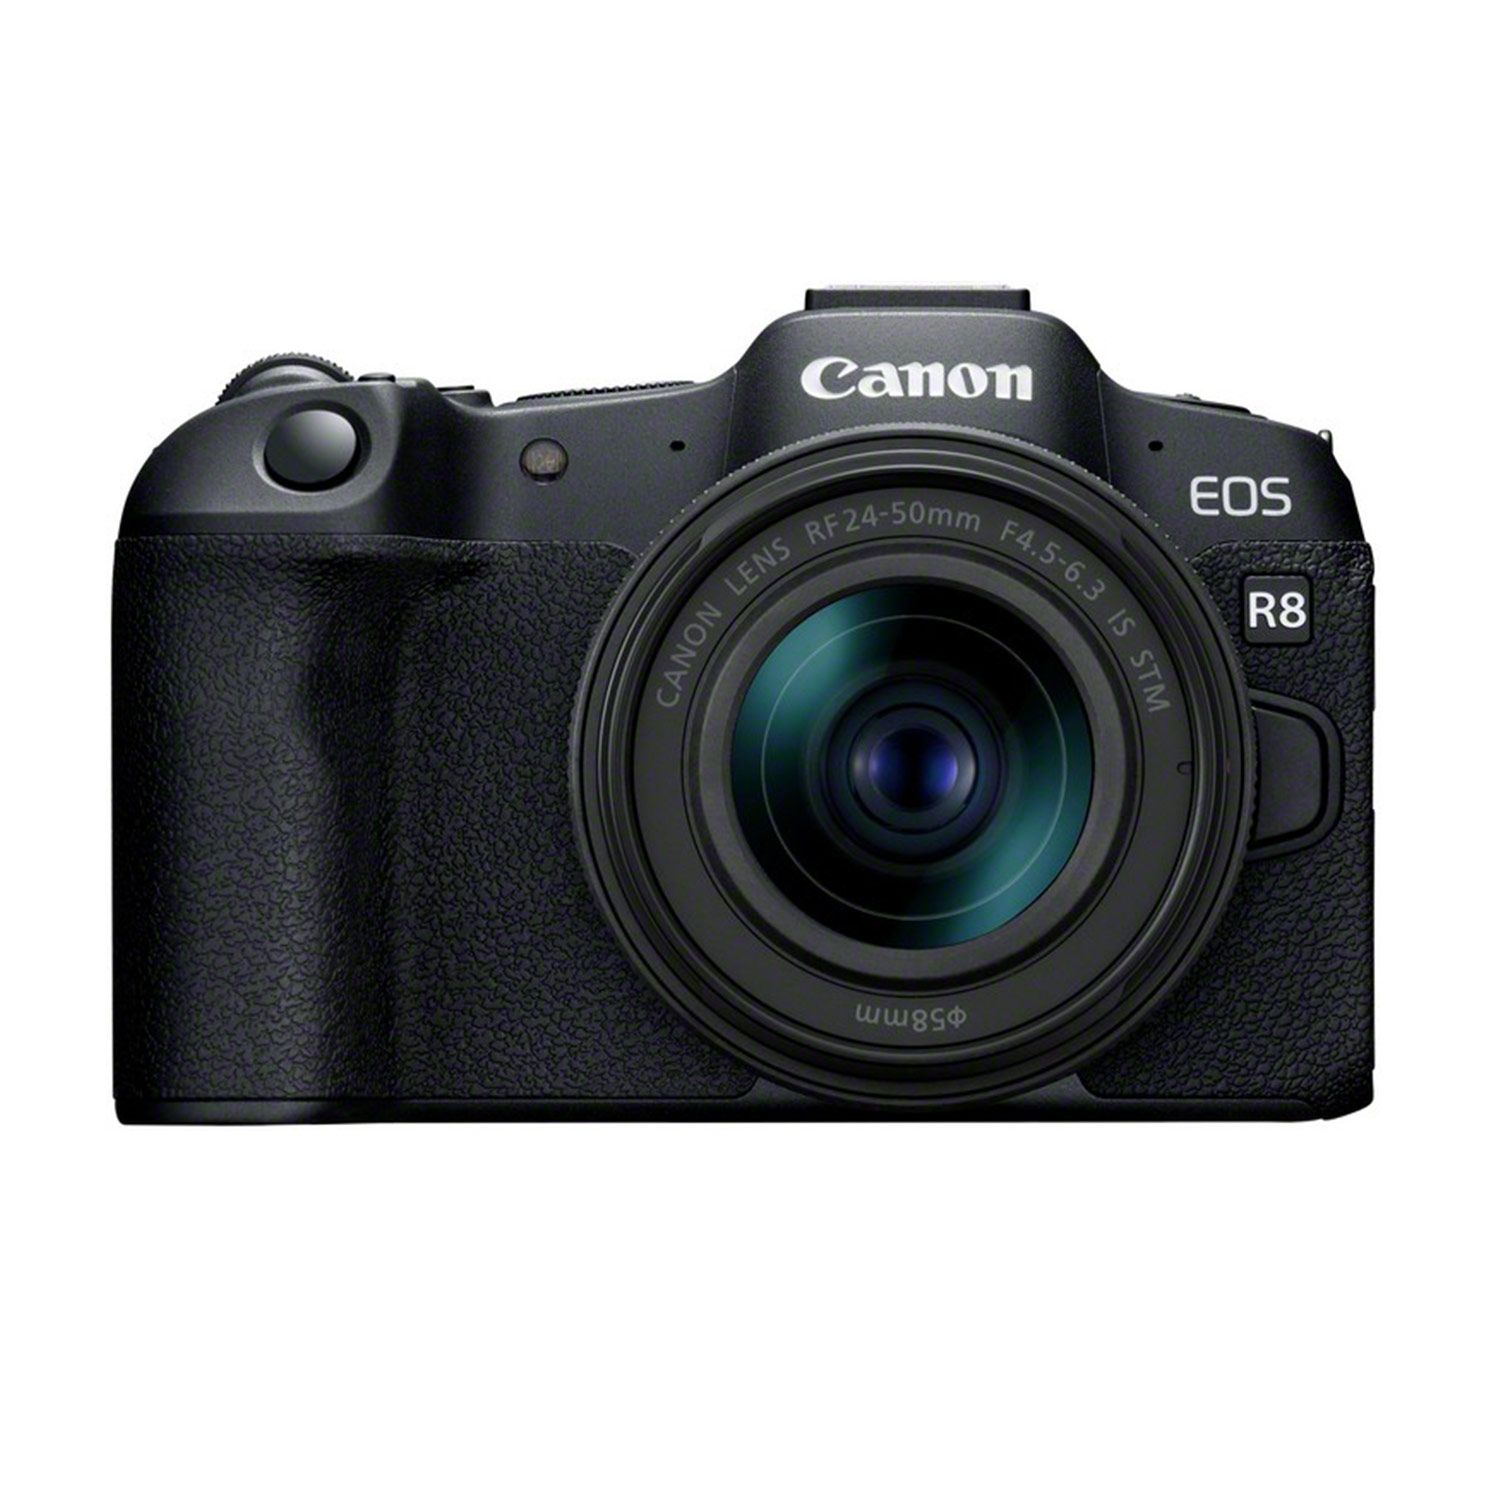 Canon ⏩ bei STM 24-50mm EOS & R8 Fotomax in IS Canon Nürnberg Berlin RF 1:4,5-6,3 +